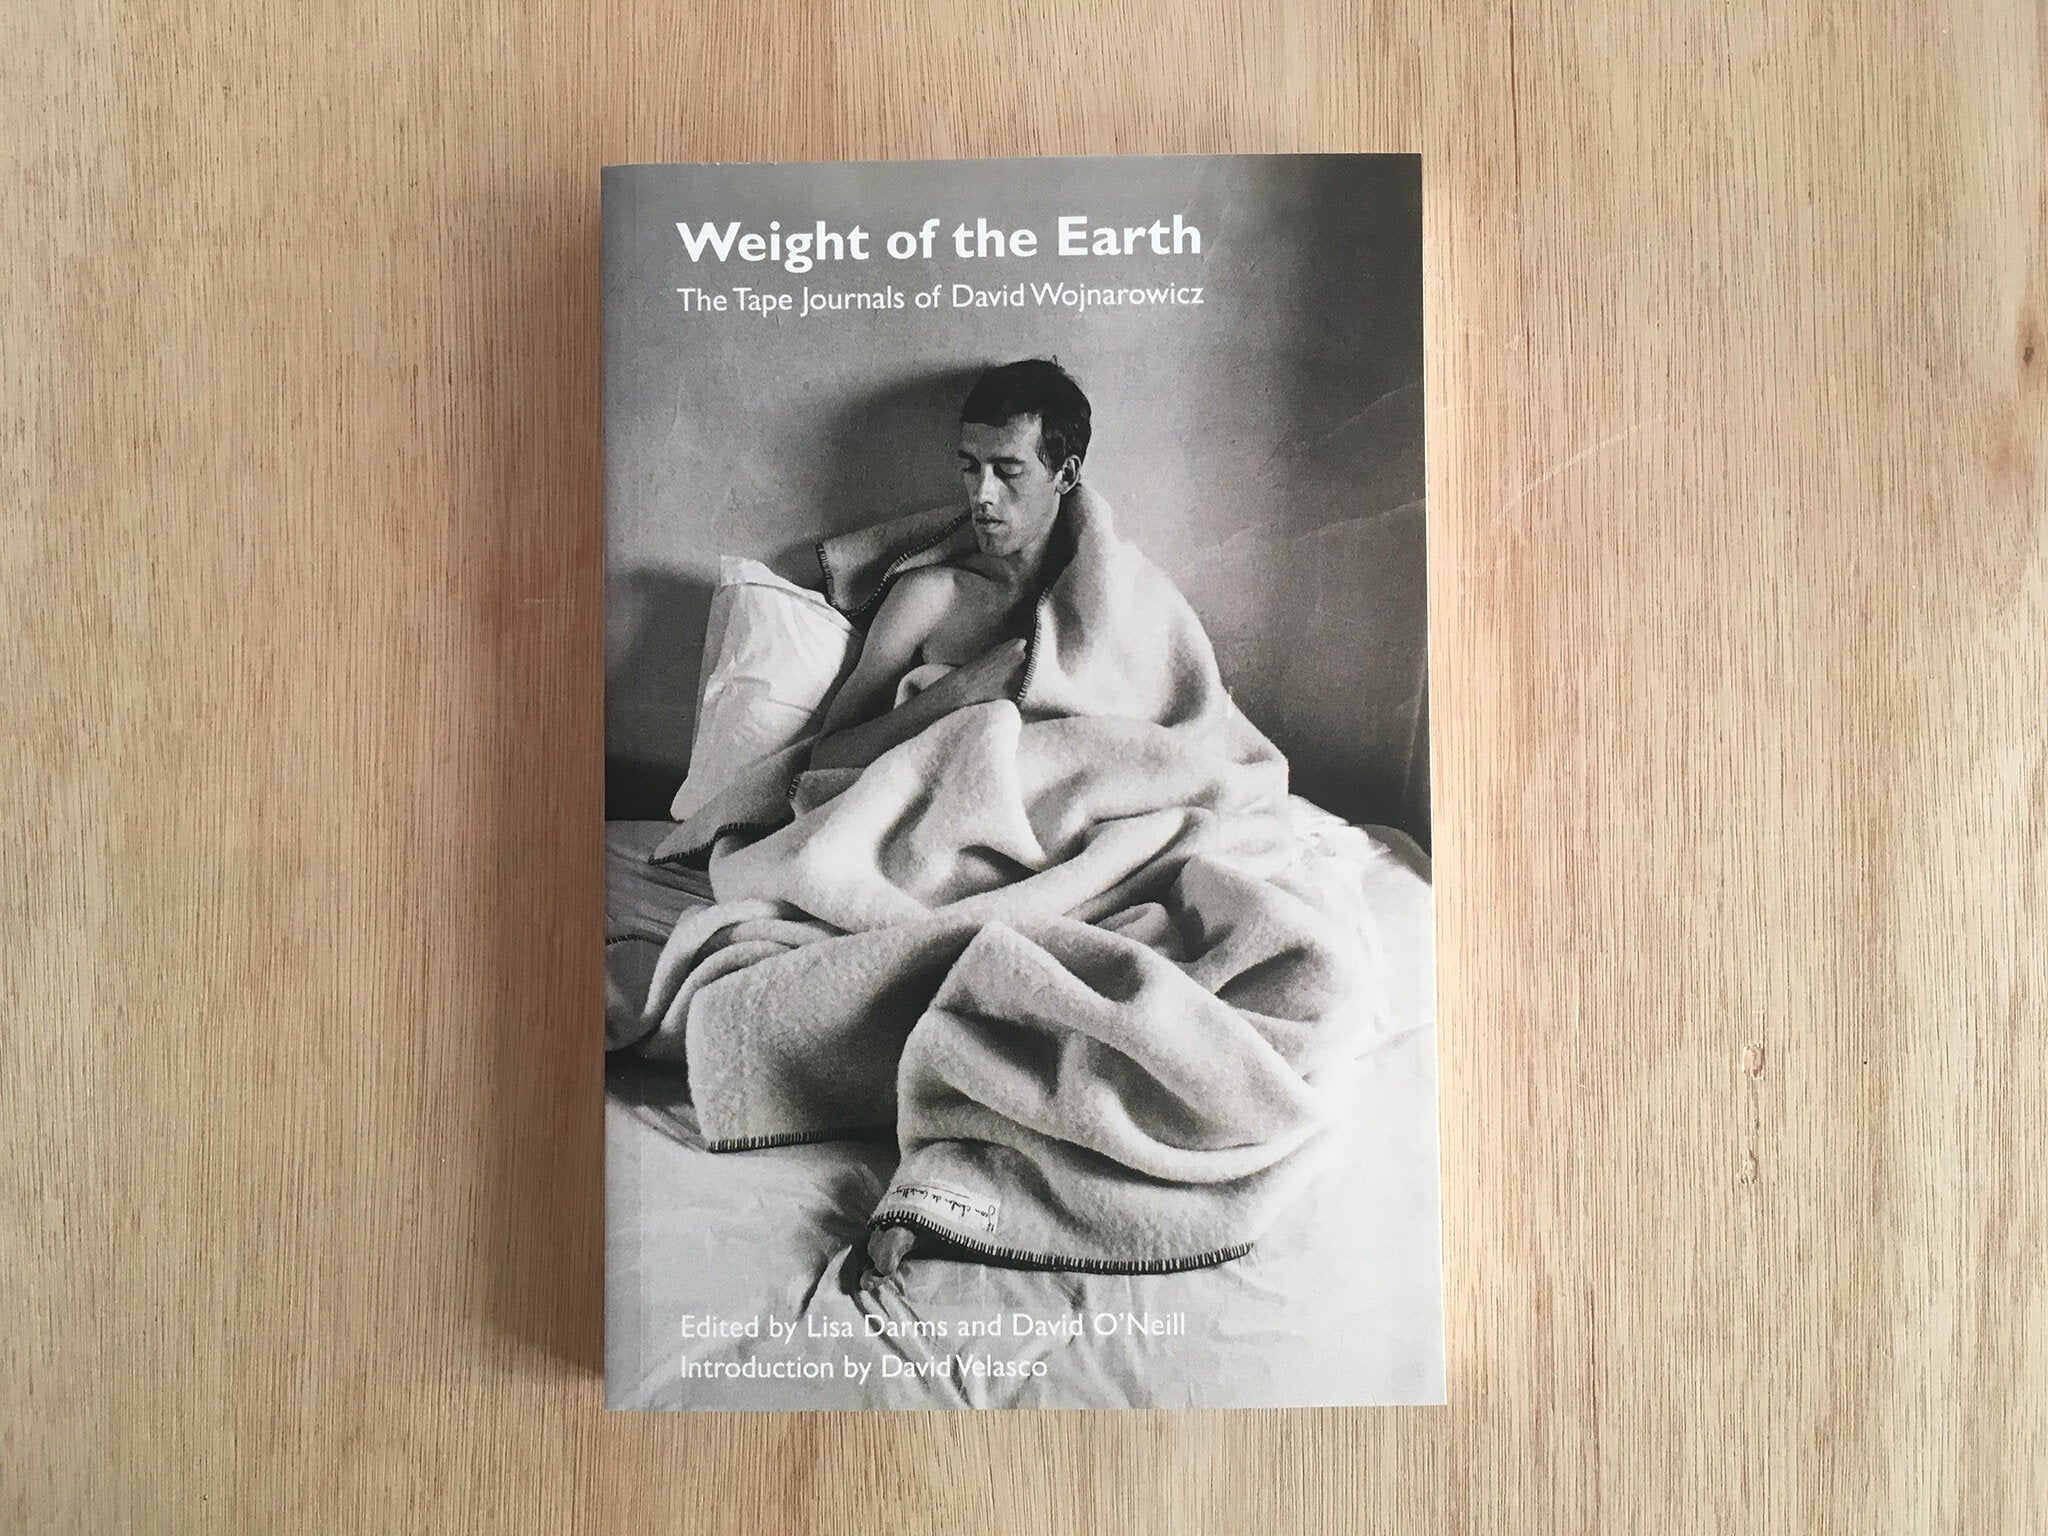 WEIGHT OF THE EARTH by David Wojnarowicz